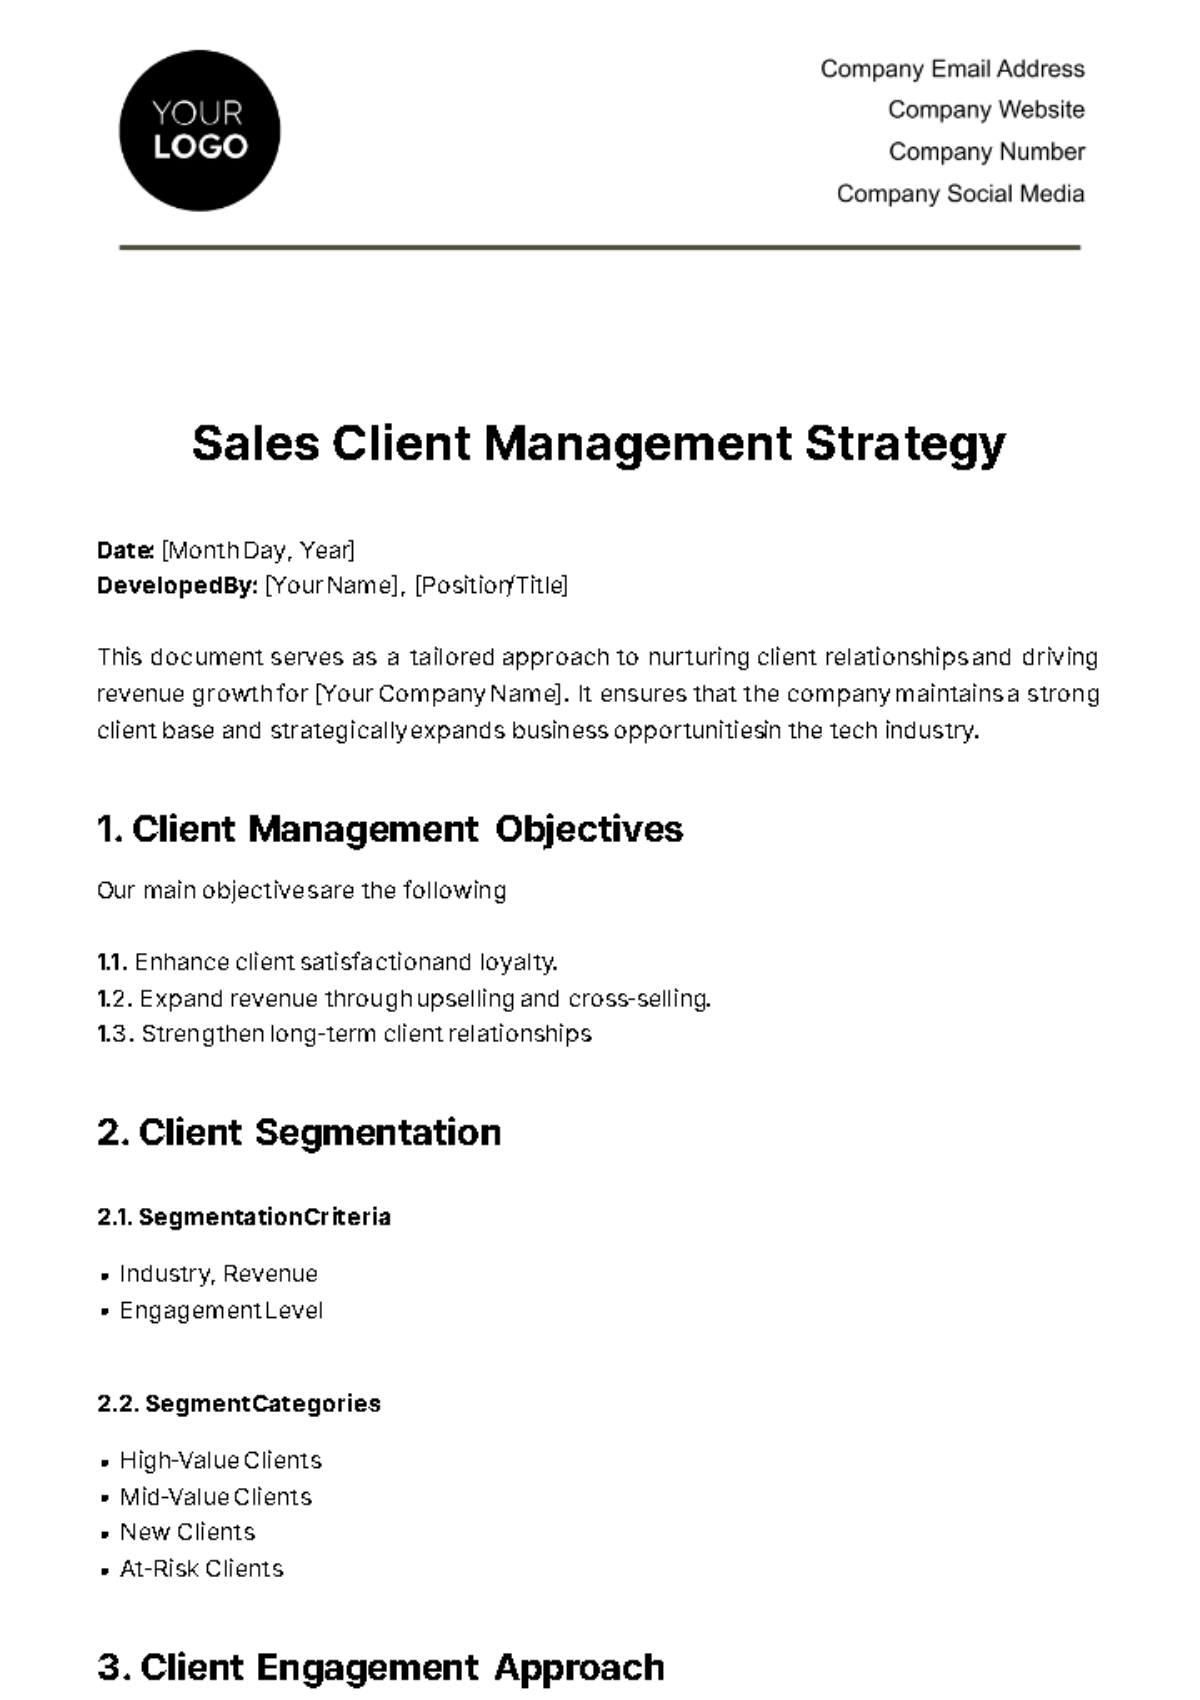 Sales Client Management Strategy Template